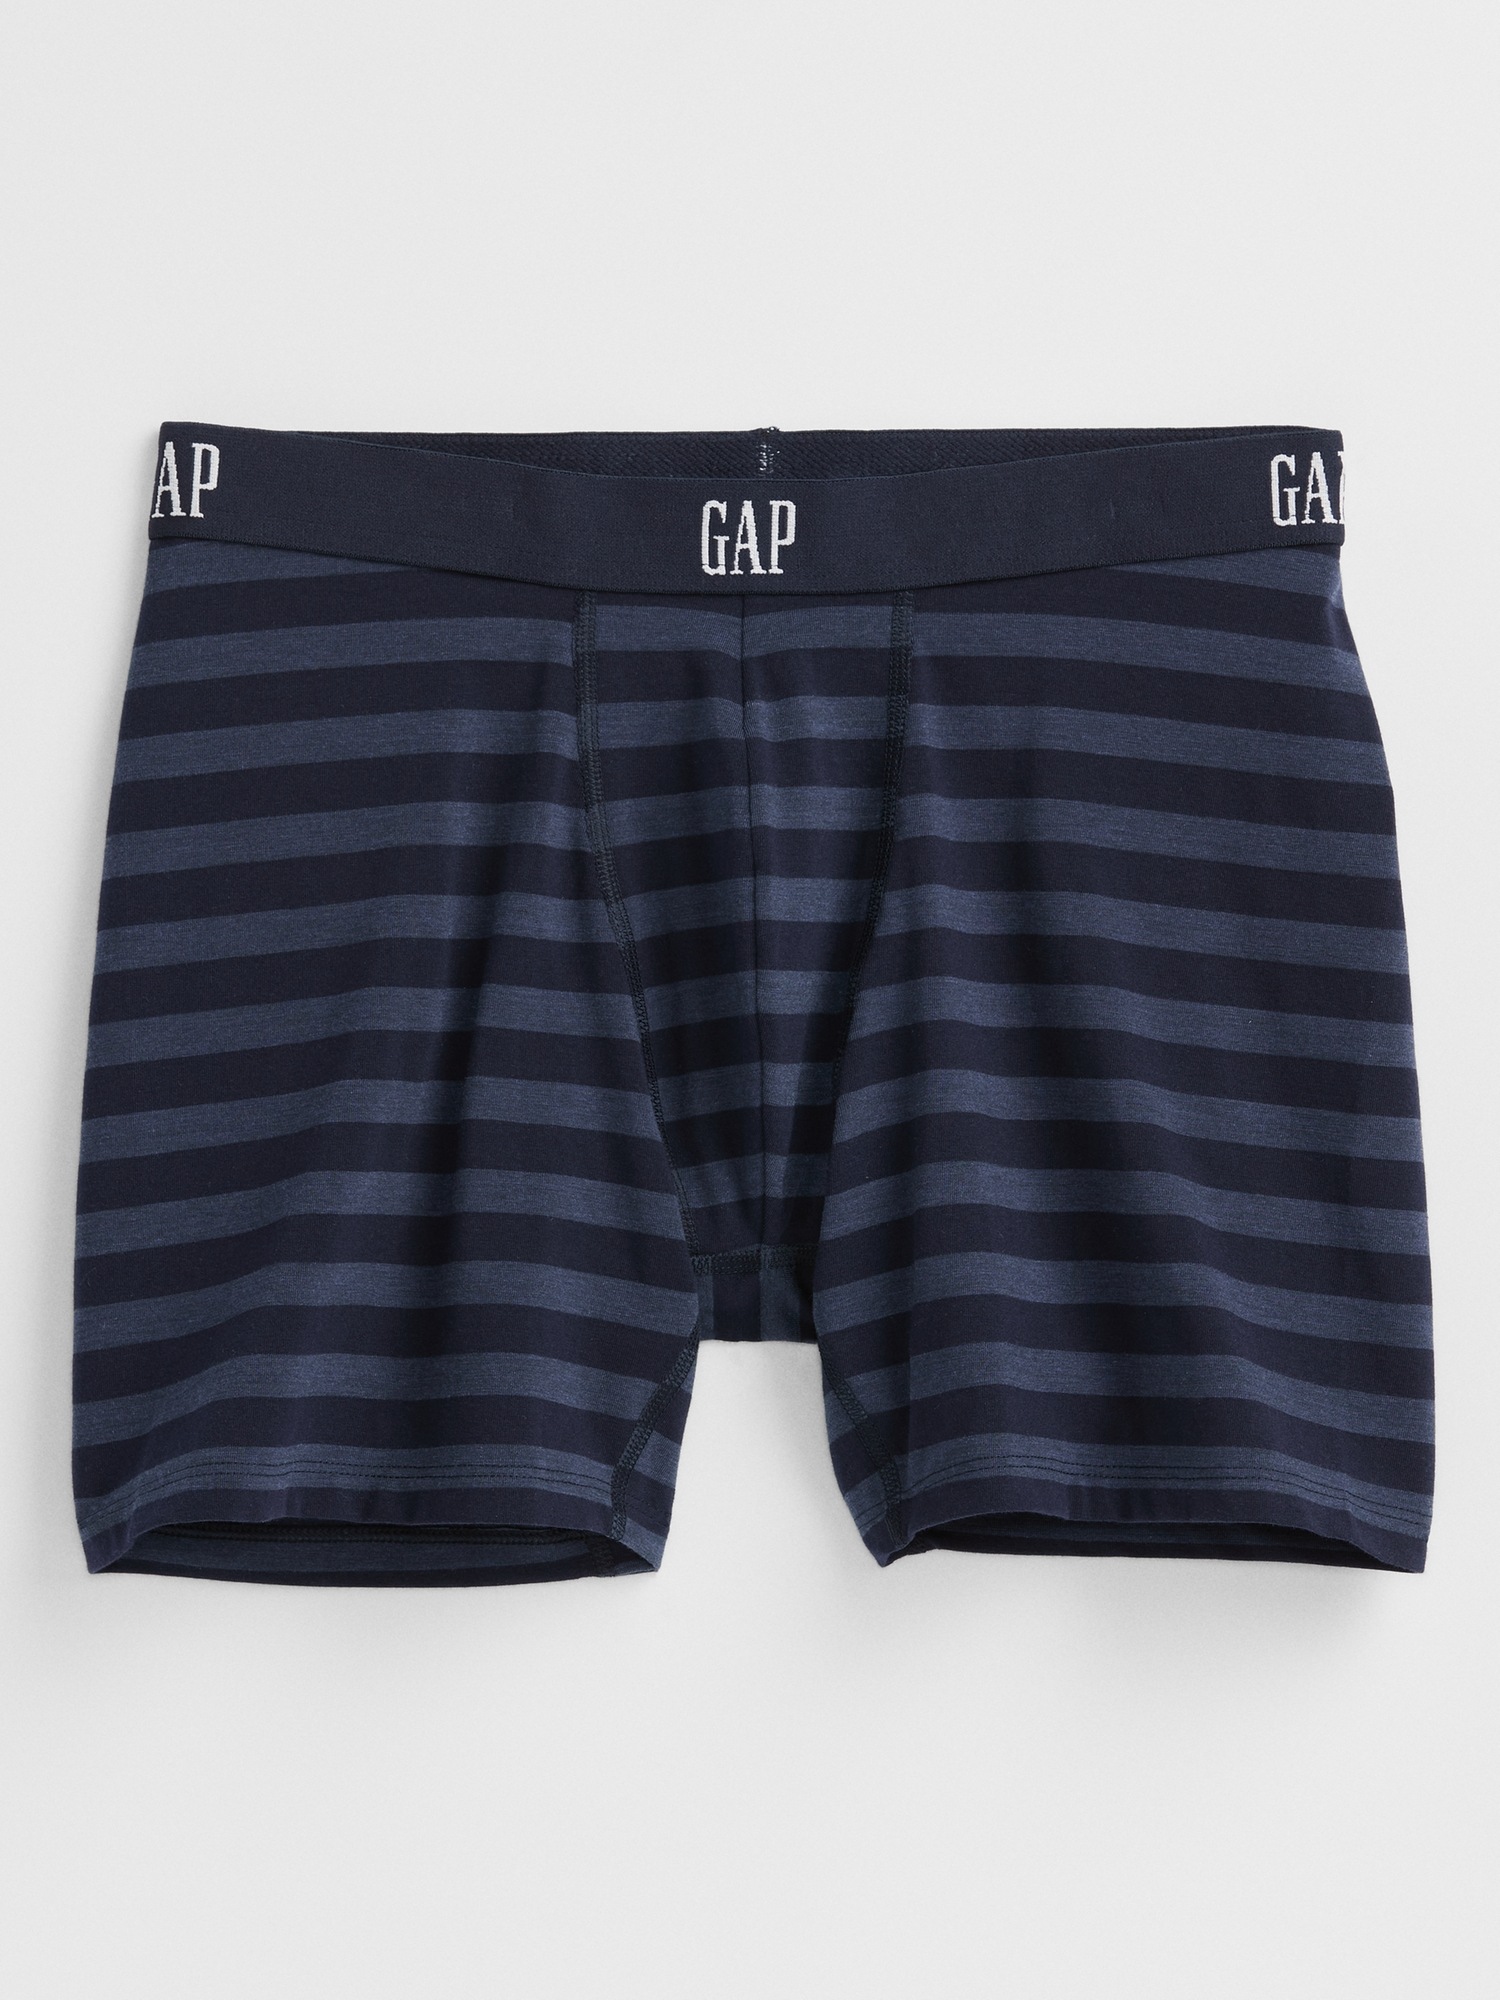 Shop GAP Stripes Bi-color Plain Boxer Briefs by mcatkomugi